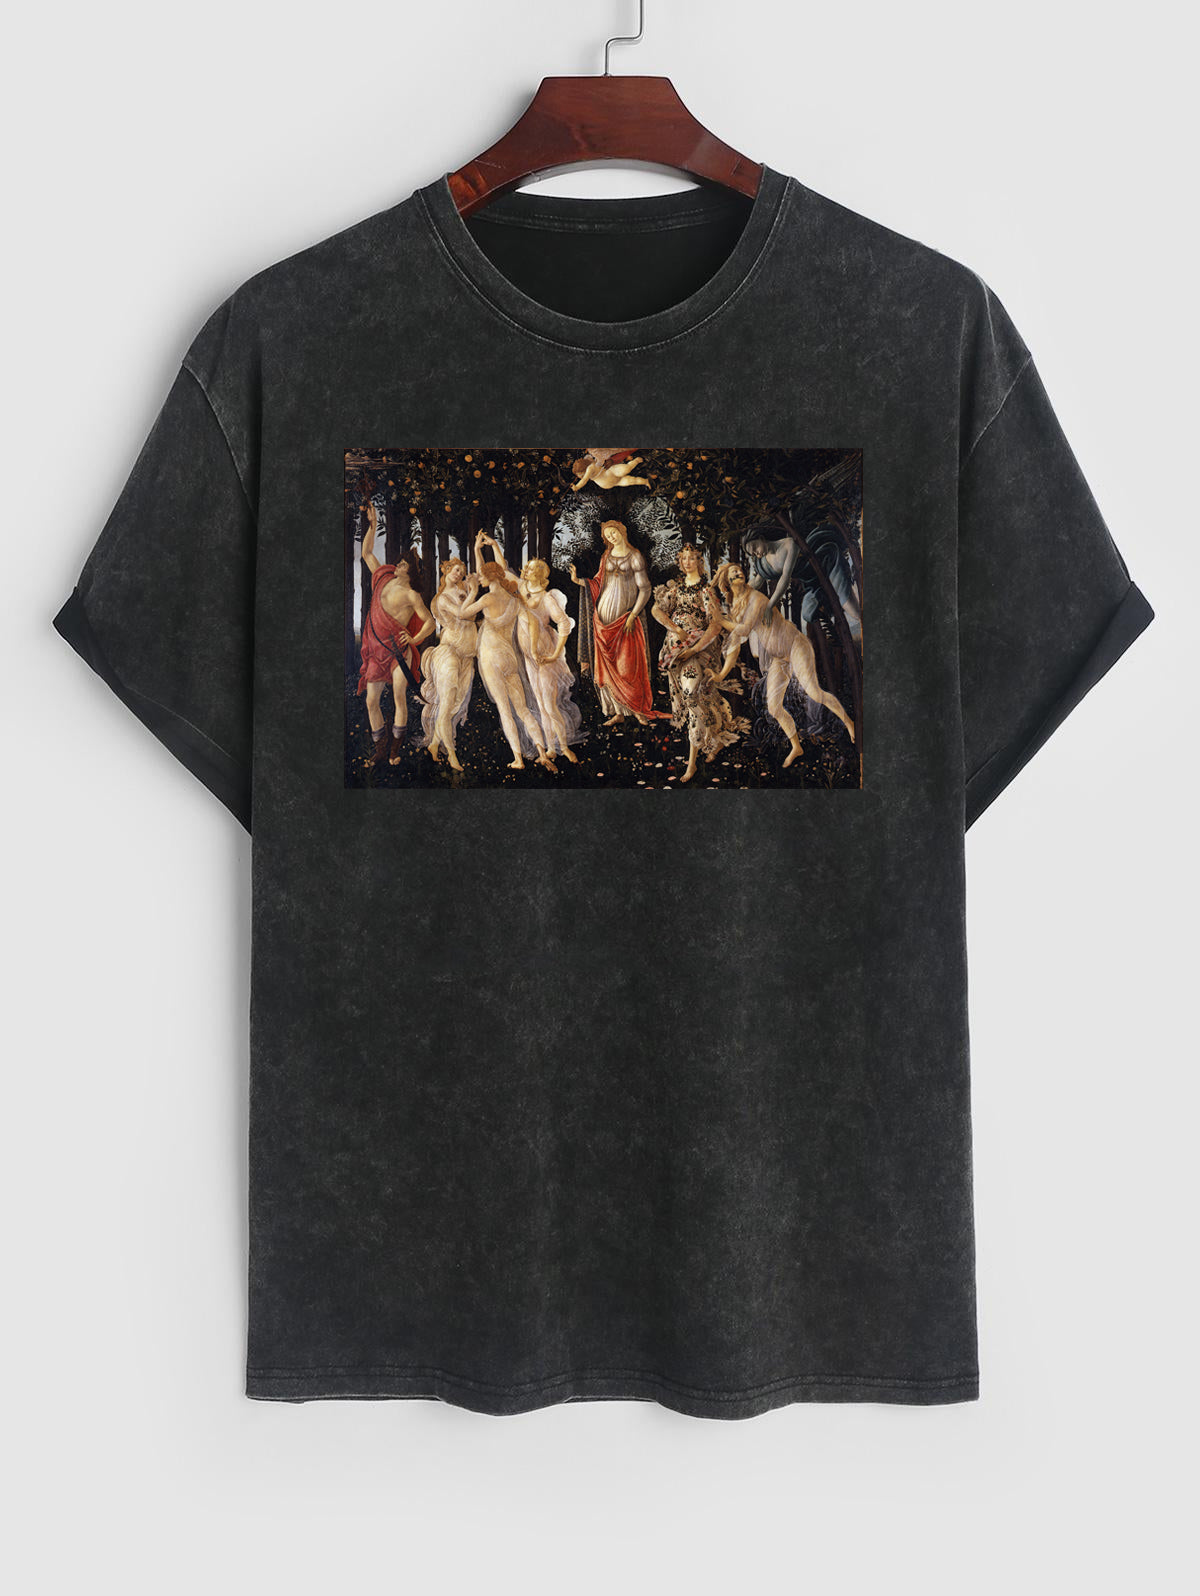 By Sandro Botticelli Renaissance Art Casual T-Shirt Unisex T-Shirt